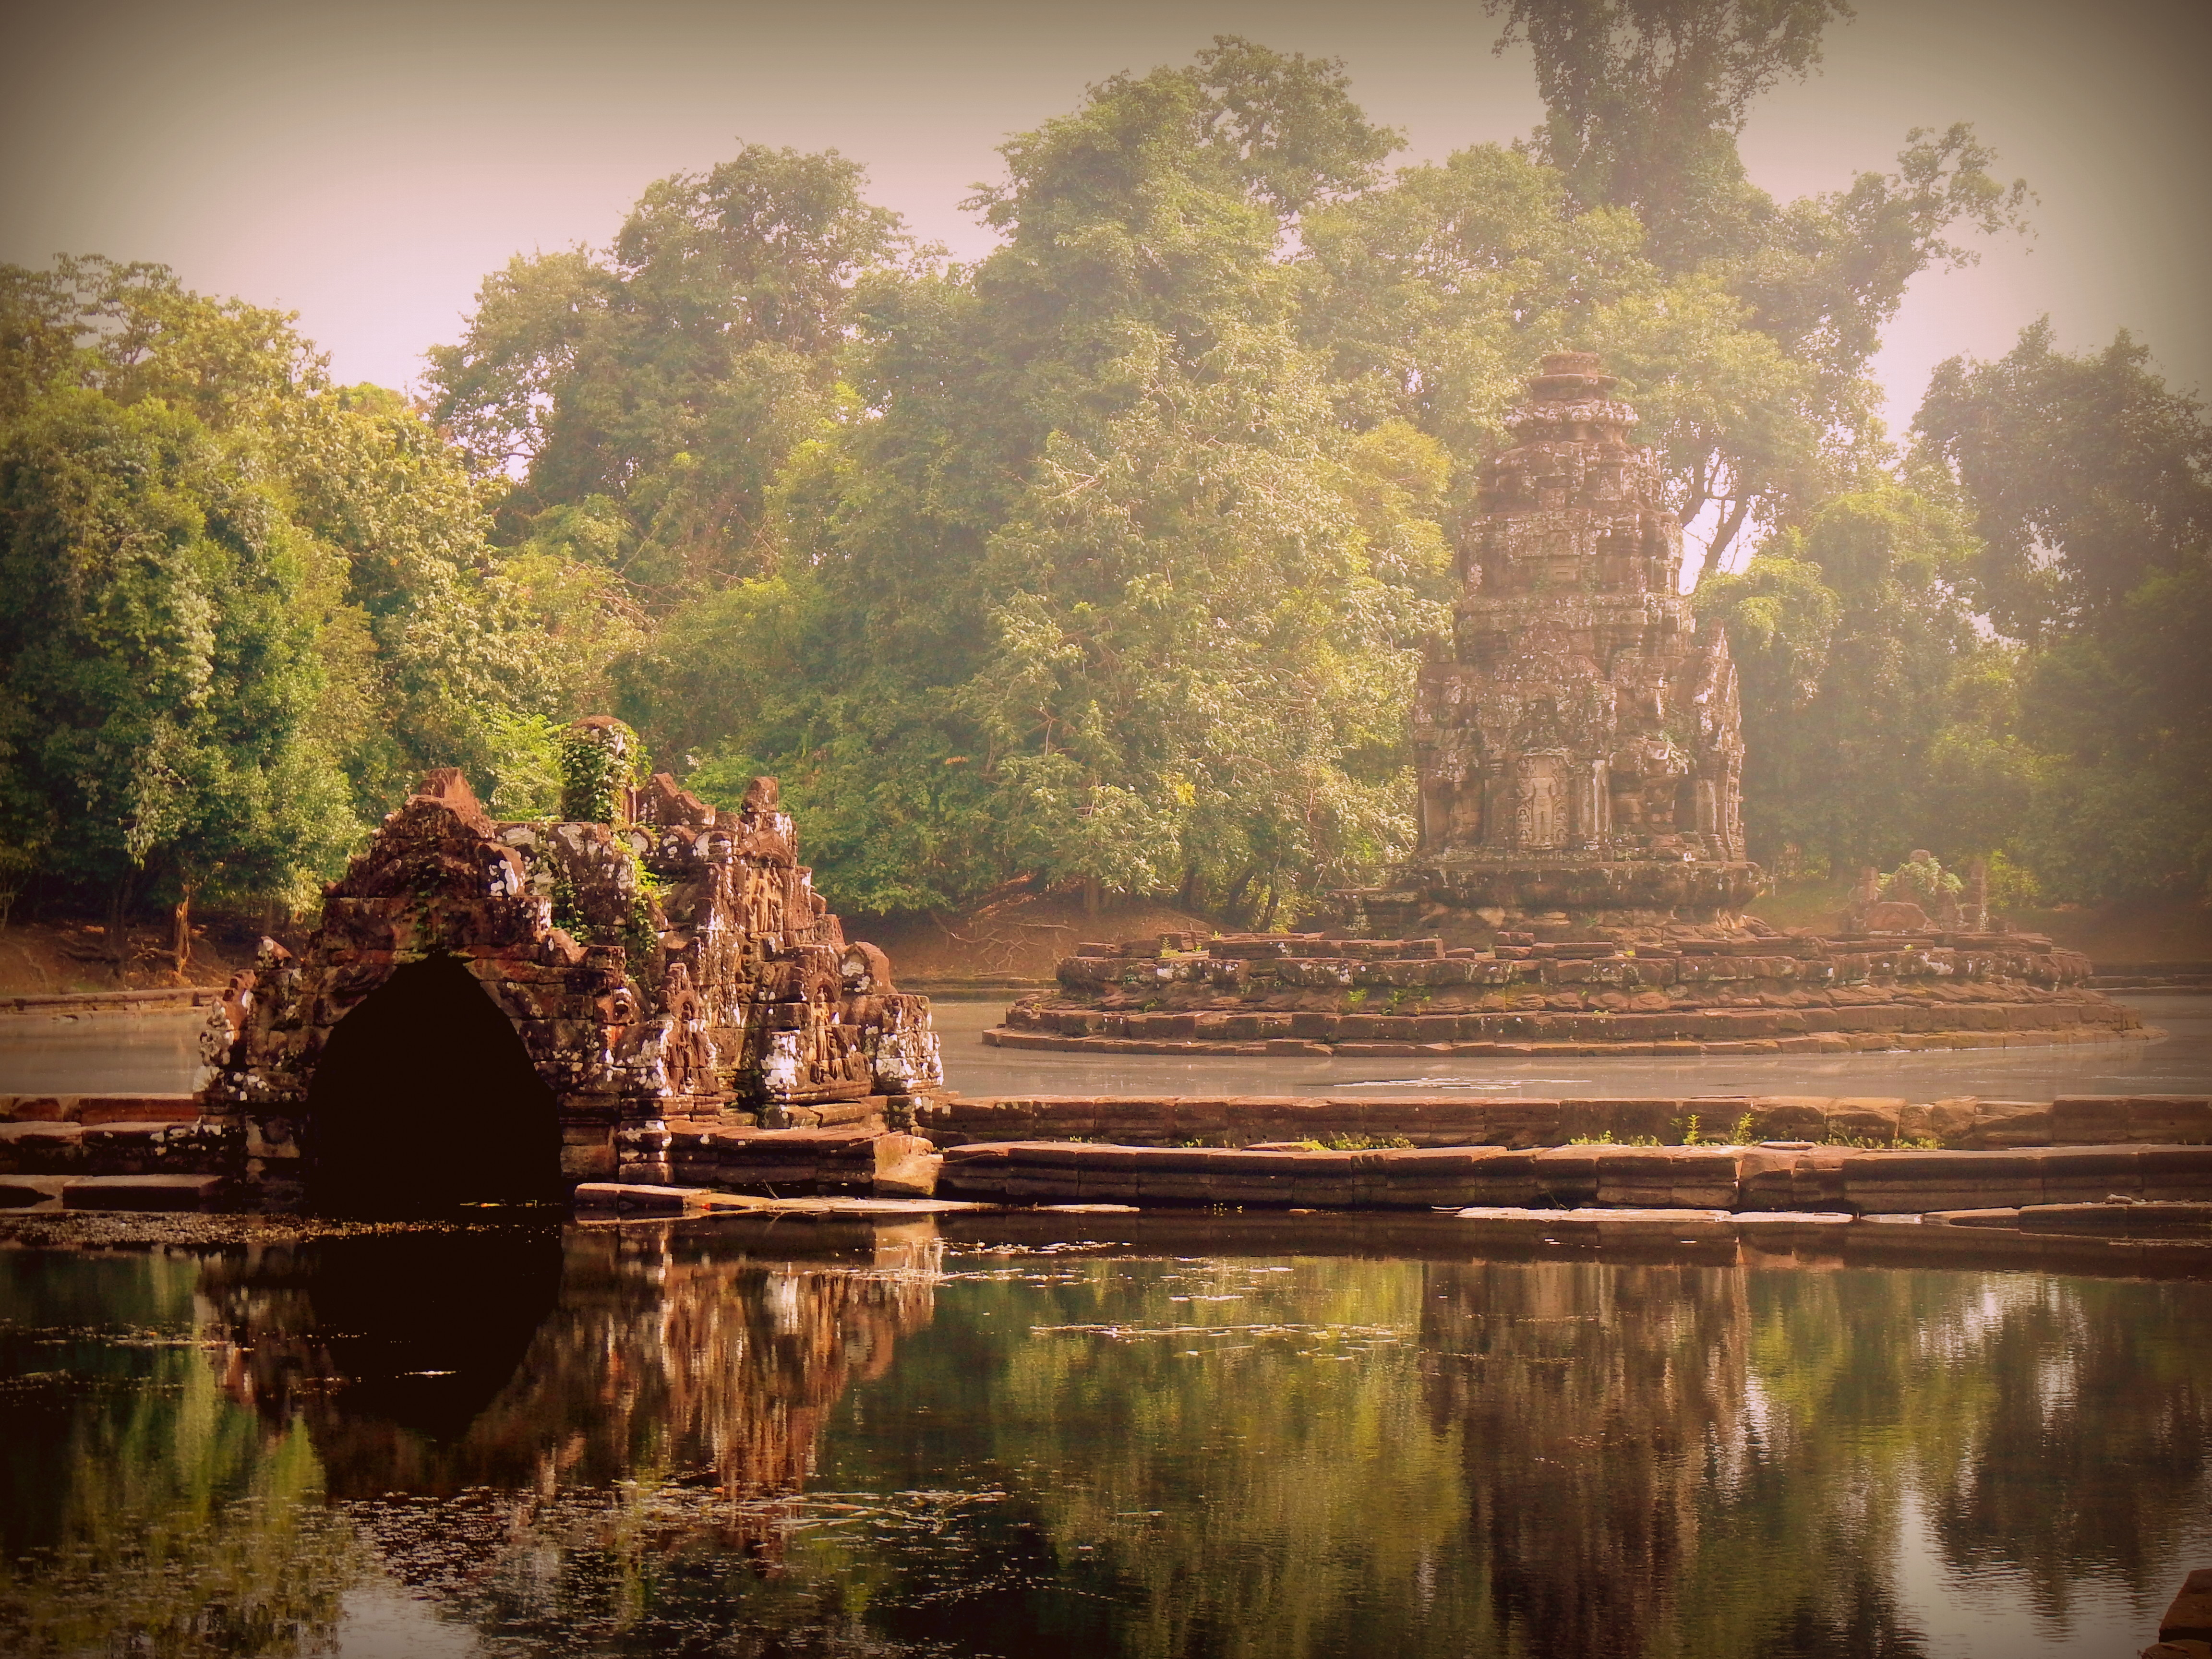 Neak Pean, the sunken temple, Cambodia